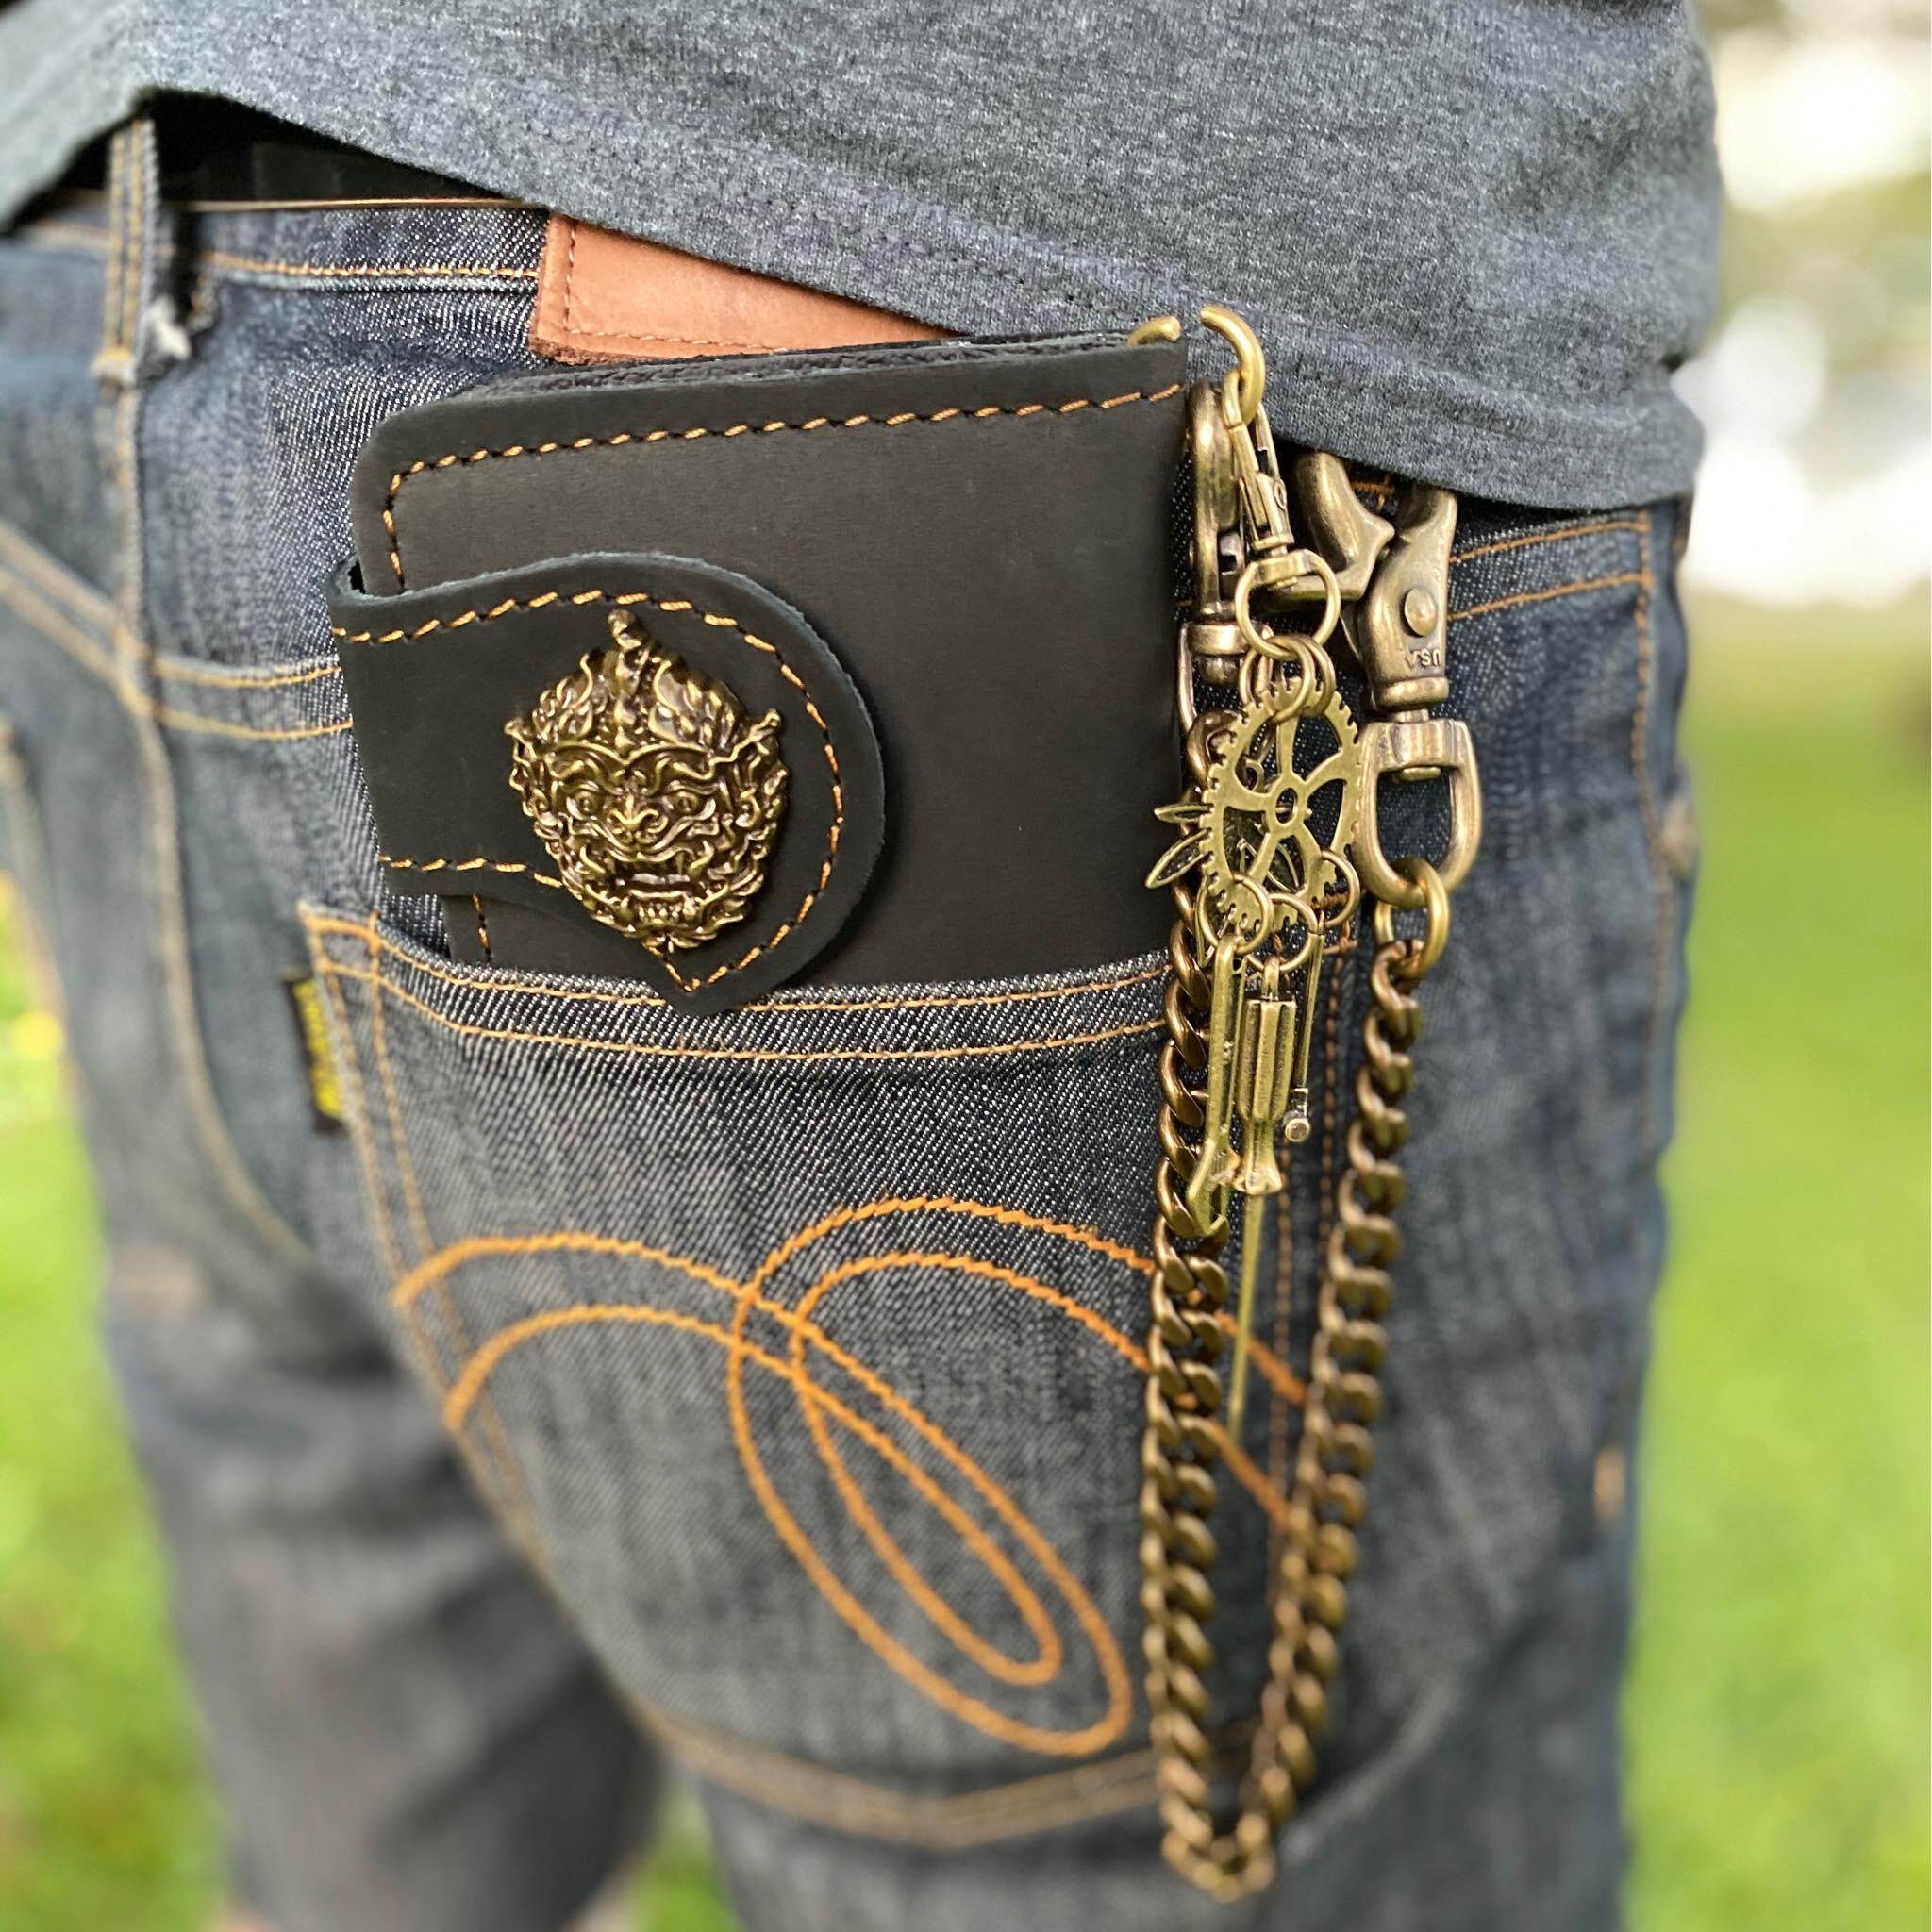 PSA Leather กระเป๋าสตางค์หนังแท้ + โซ่ทองเหลือง + พวงกุญแจ*02 สไตล์วินเทจ เท่ๆ (ได้ครบชุด)